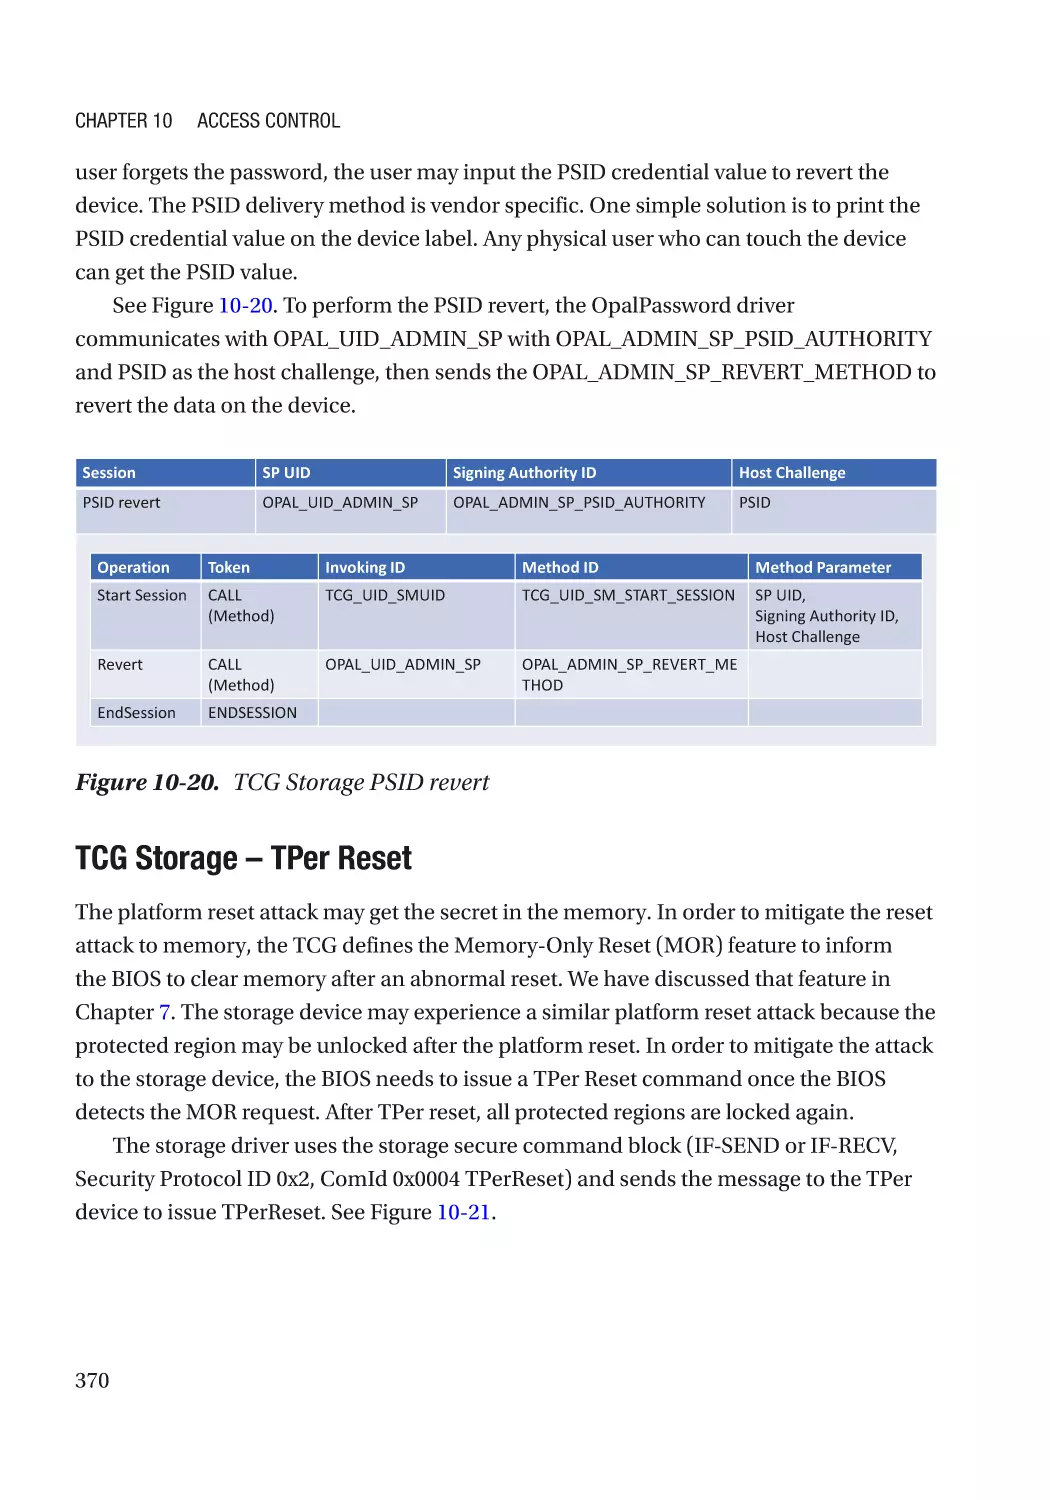 TCG Storage – TPer Reset